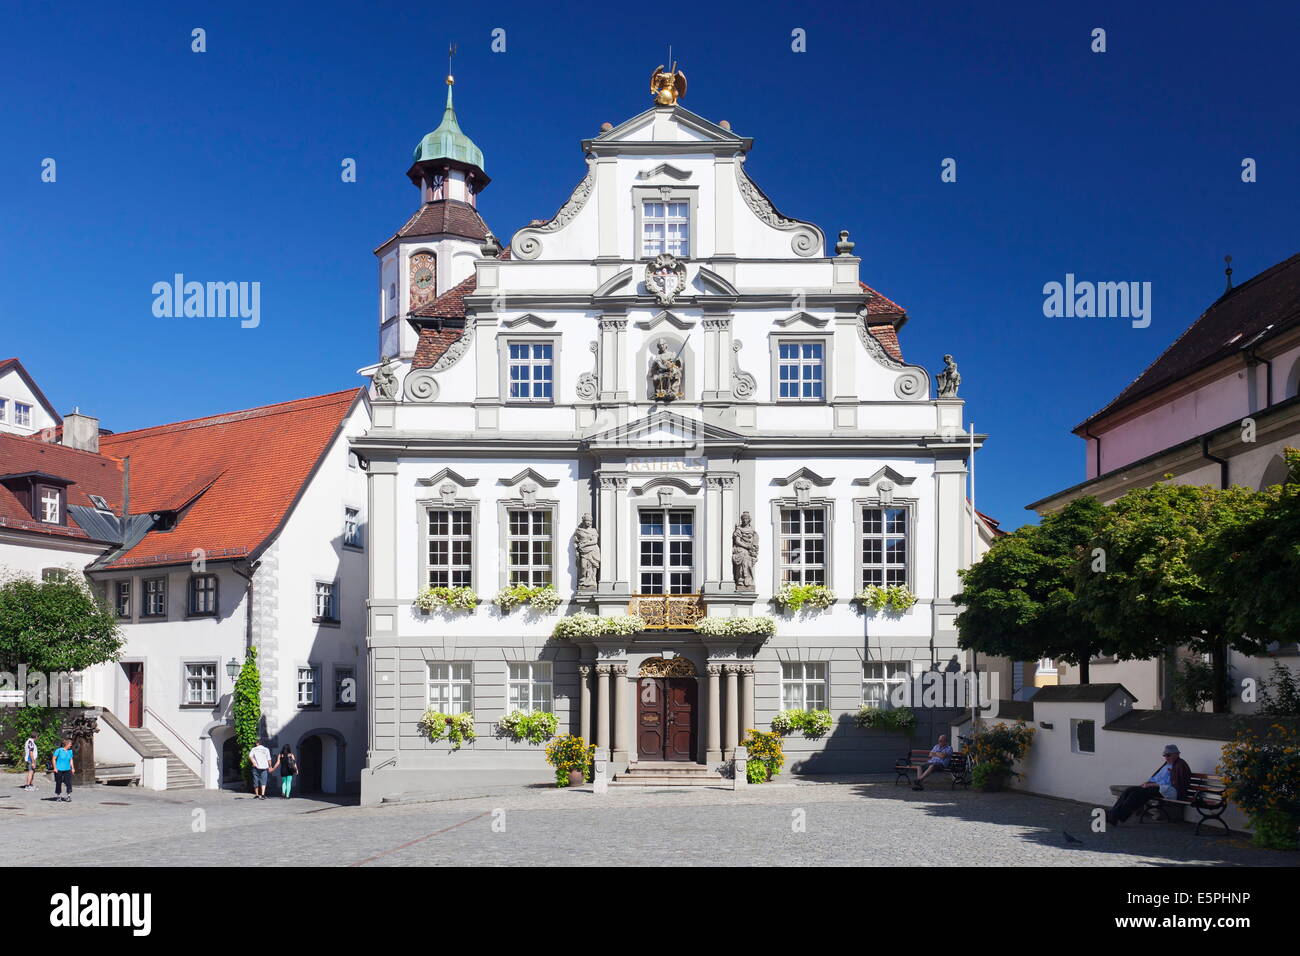 Town Hall, Market Square, Wangen, Upper Swabia, Baden Wurttemberg, Germany, Europe Stock Photo